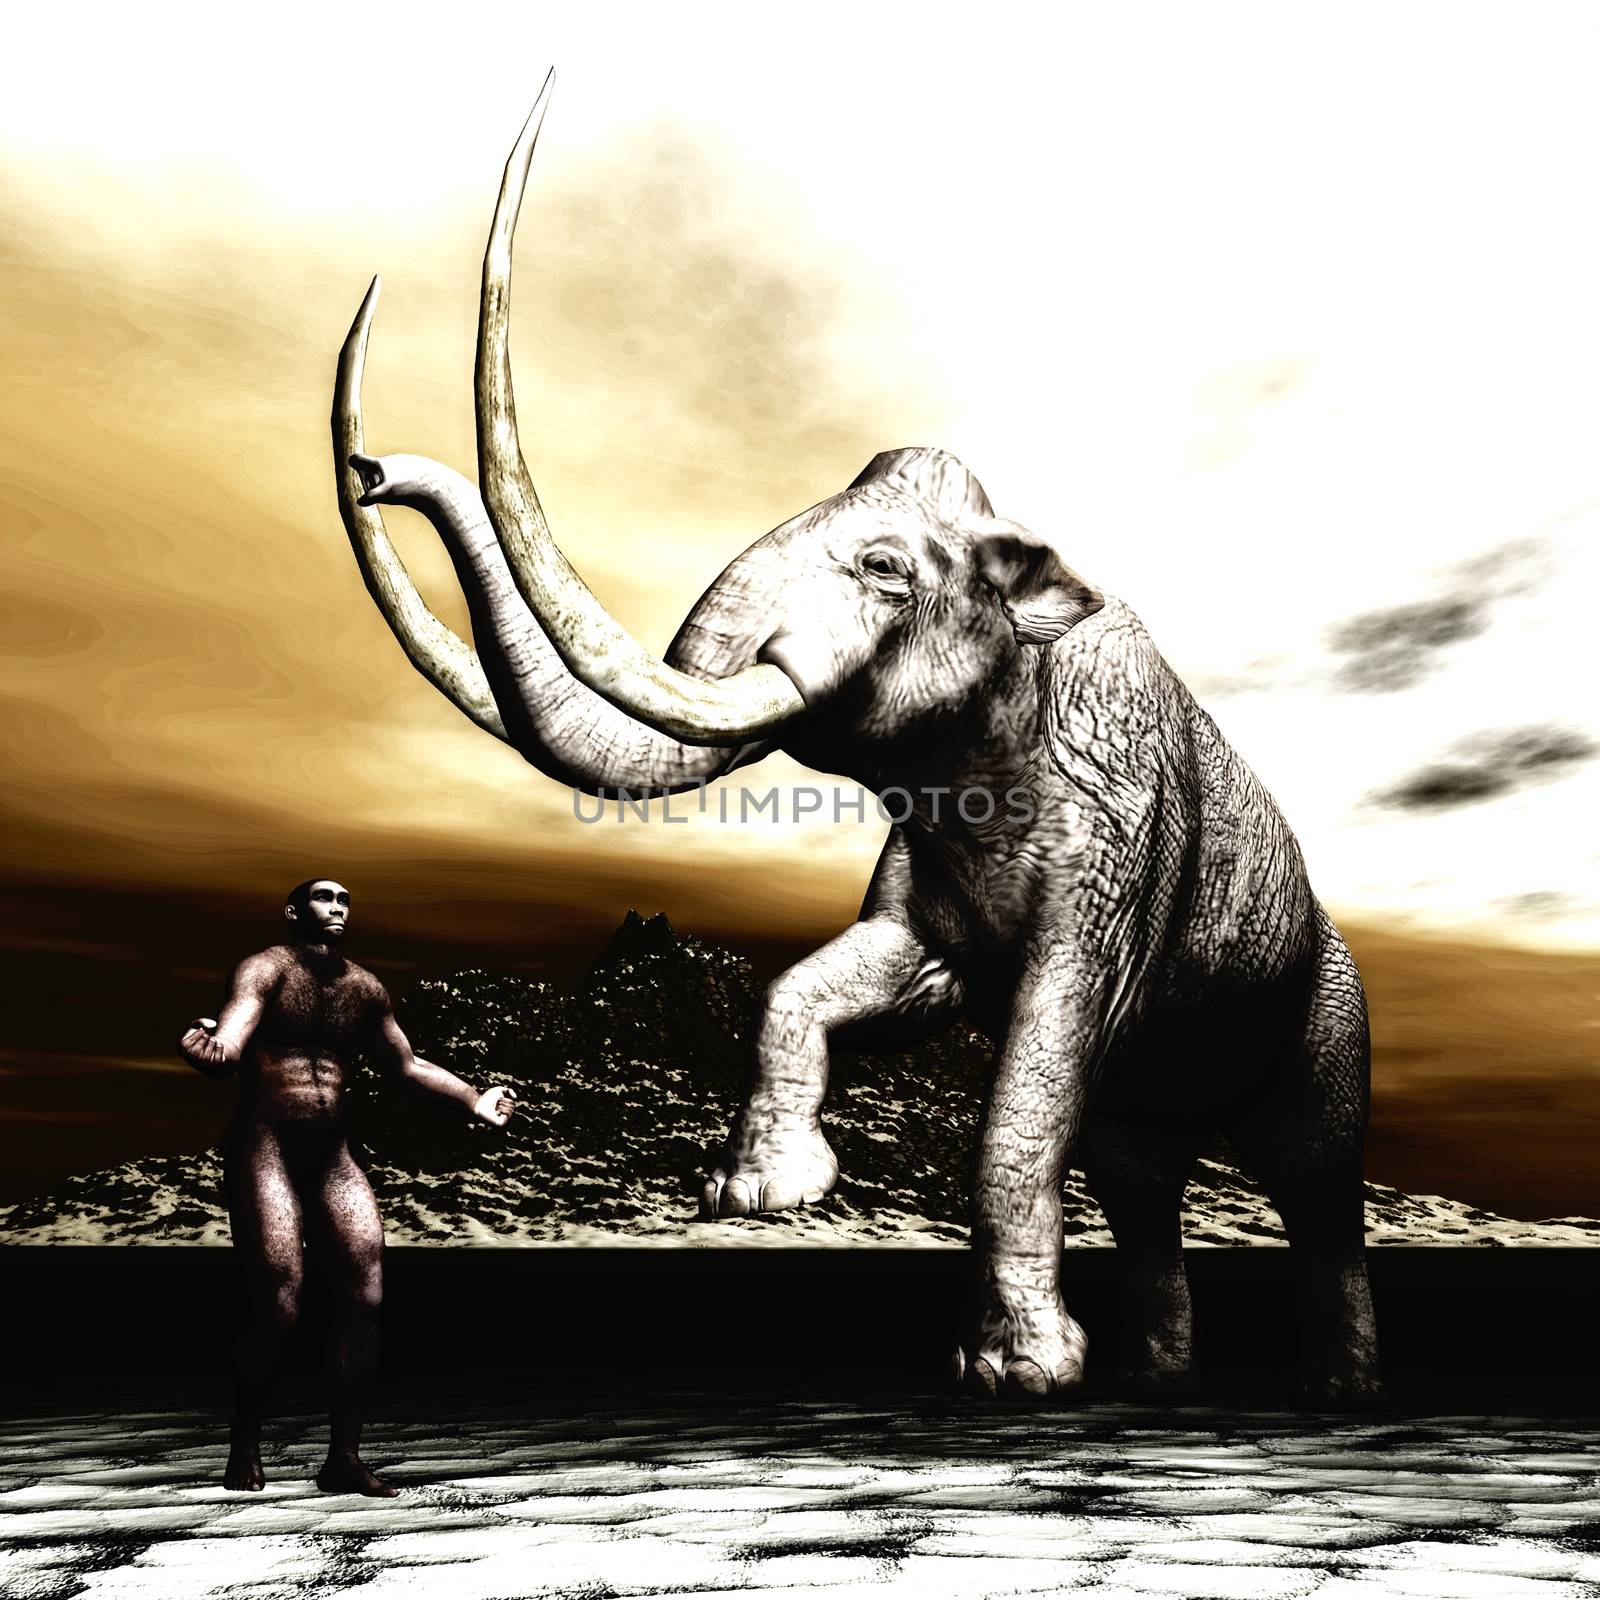 Mammoth with prehistoric man